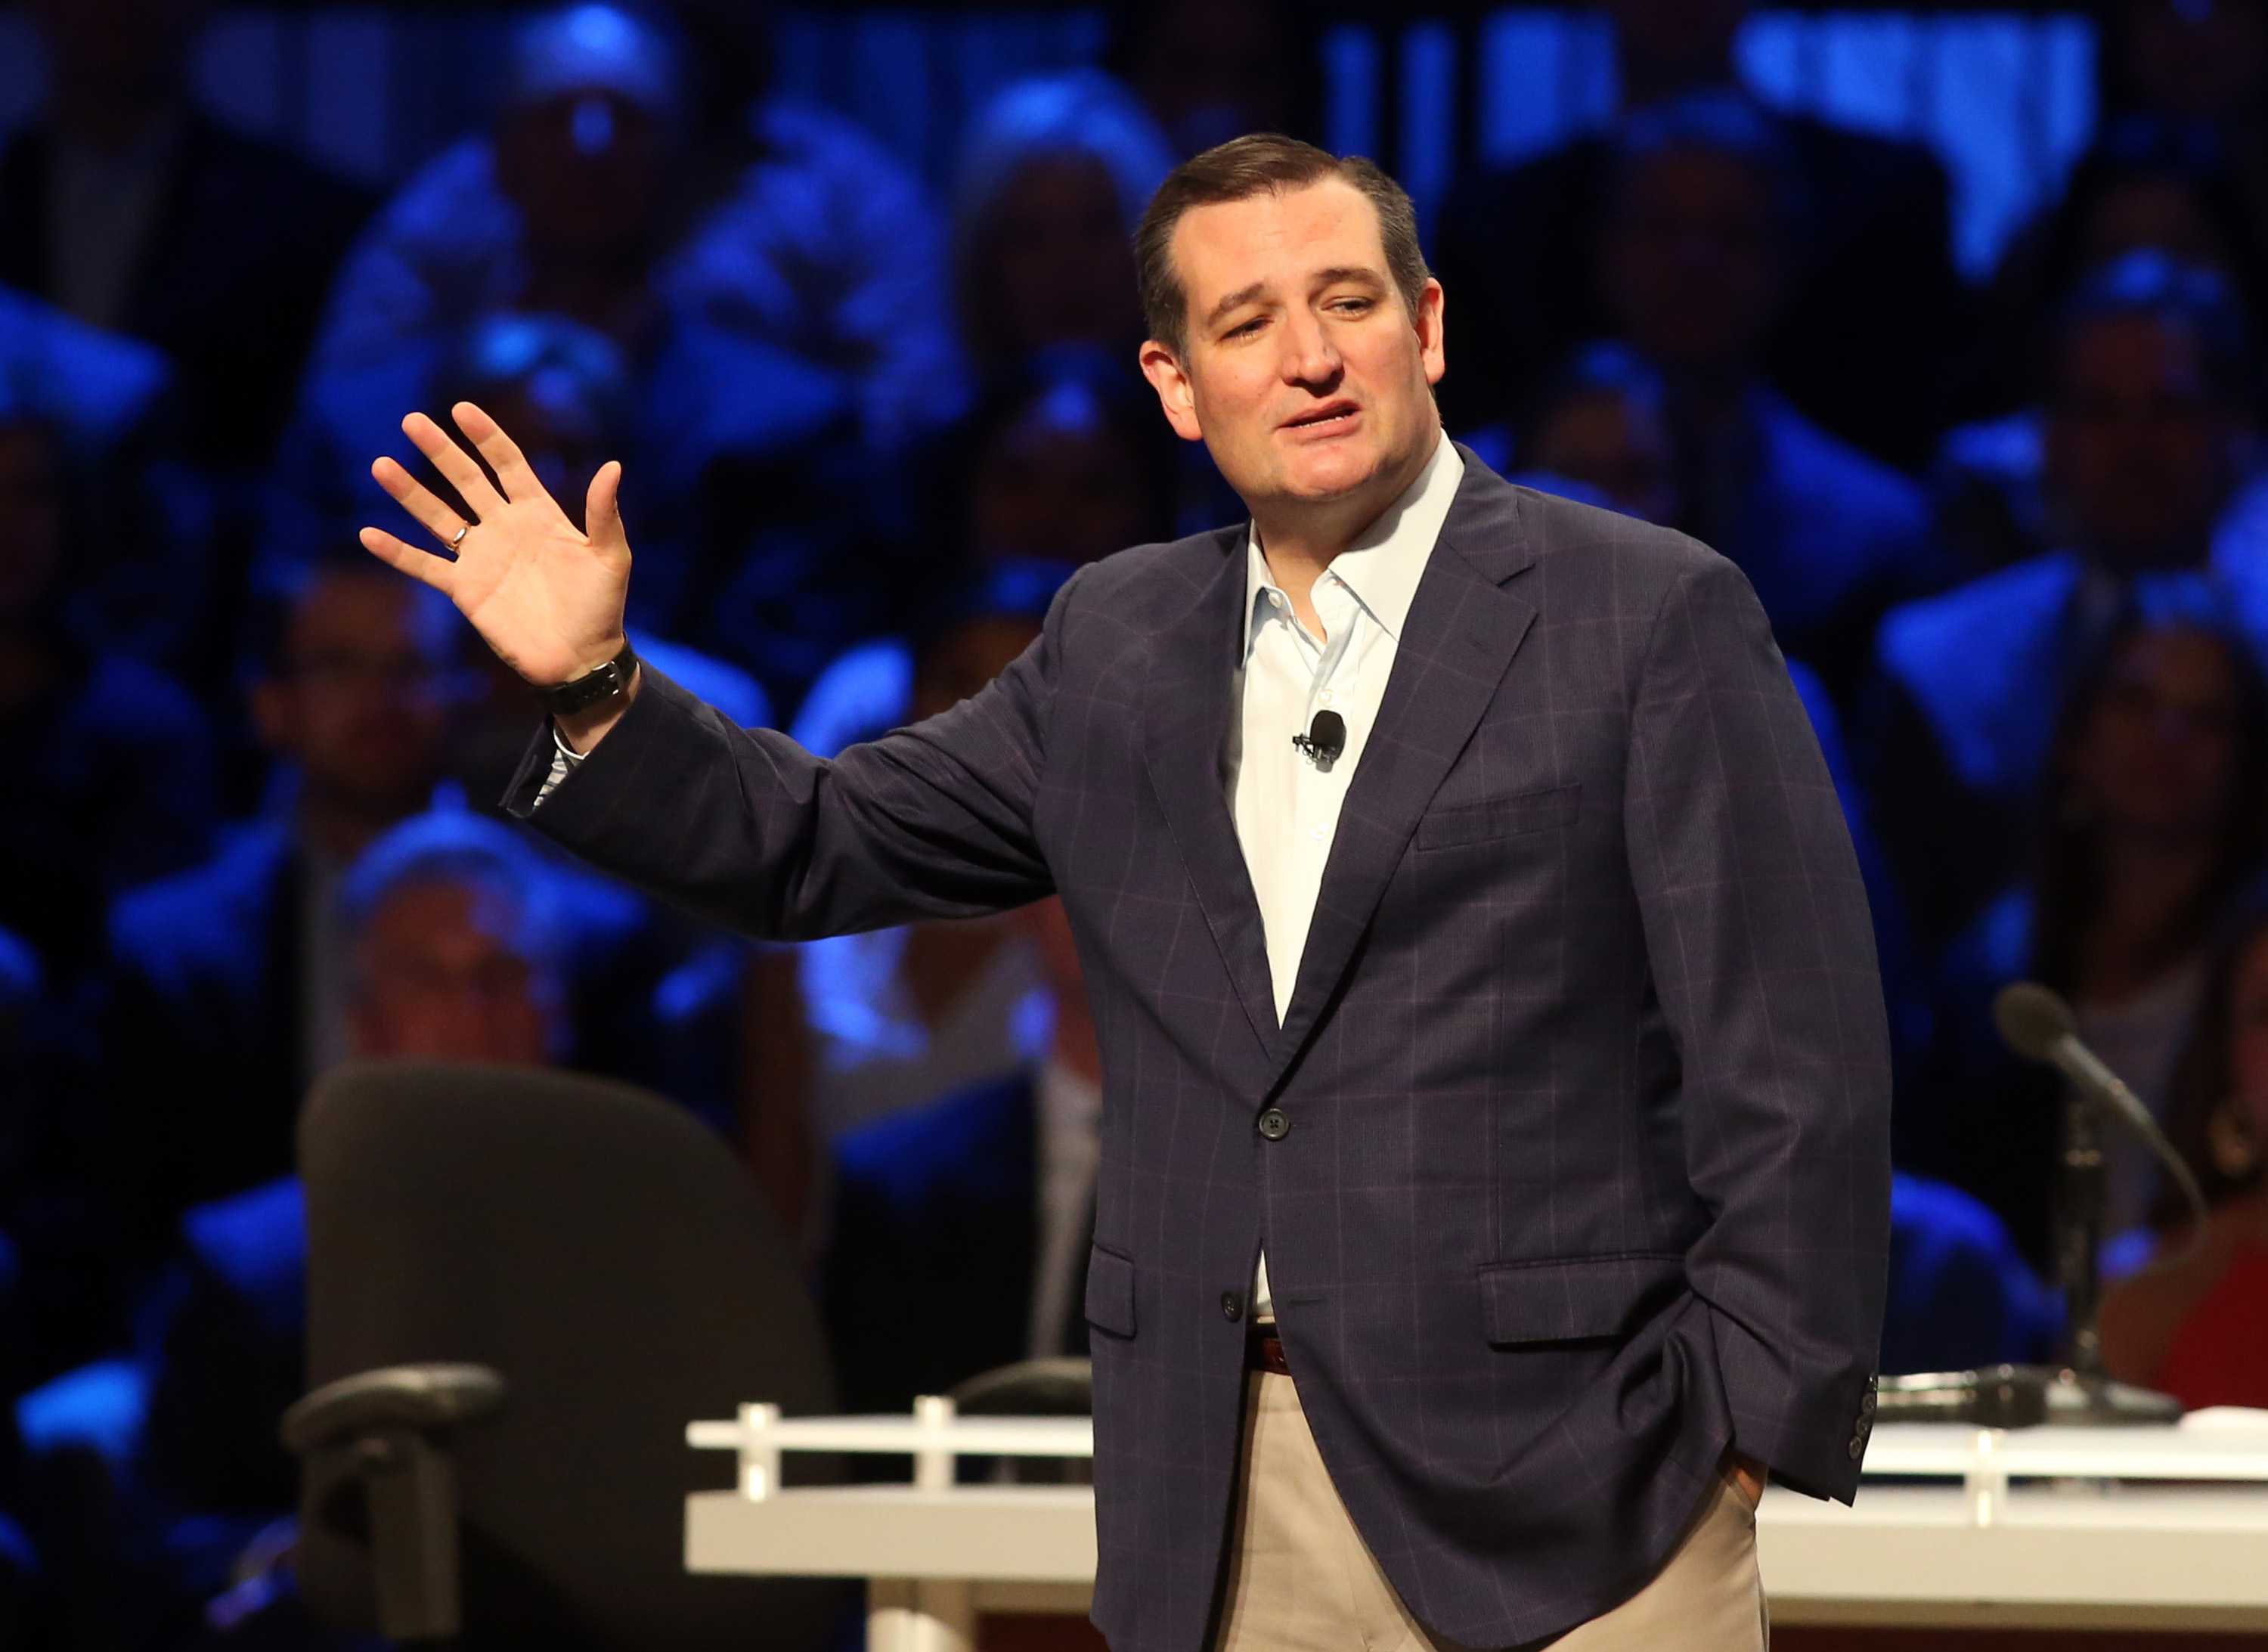 Republican presidential candidate Ted Cruz speaks at the North Texas Presidential Forum at Prestonwood Baptist Church Sunday, Oct. 18, 2015 in Plano, Texas. (Richard W. Rodriguez/Fort Worth Star-Telegram/TNS)